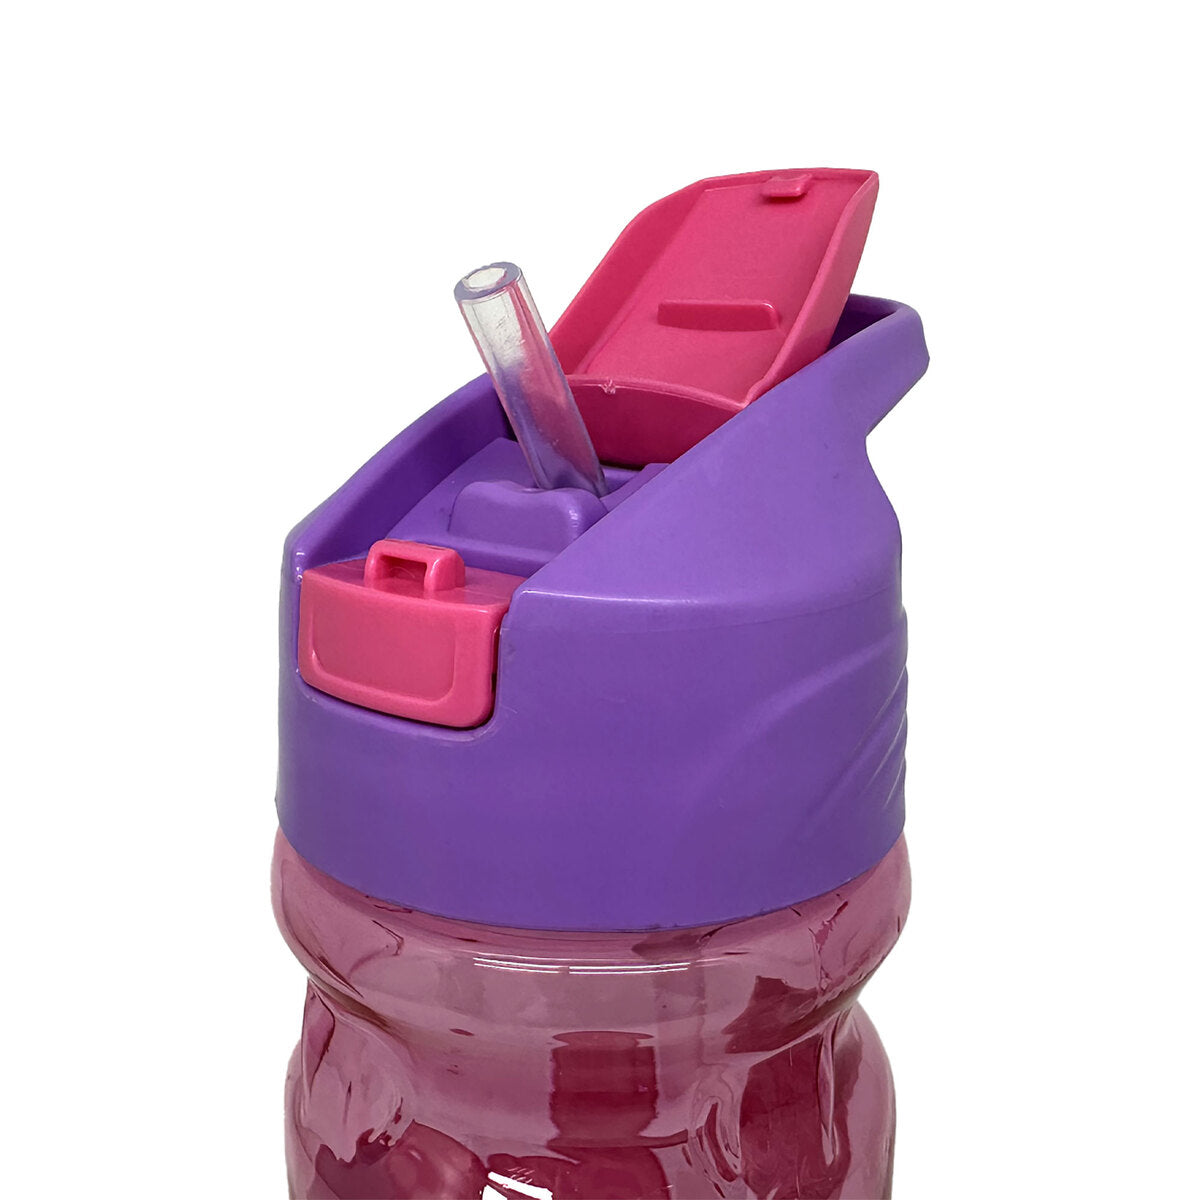 Barbie Sport Water Bottle 500ml | School Supplies | Halabh.com